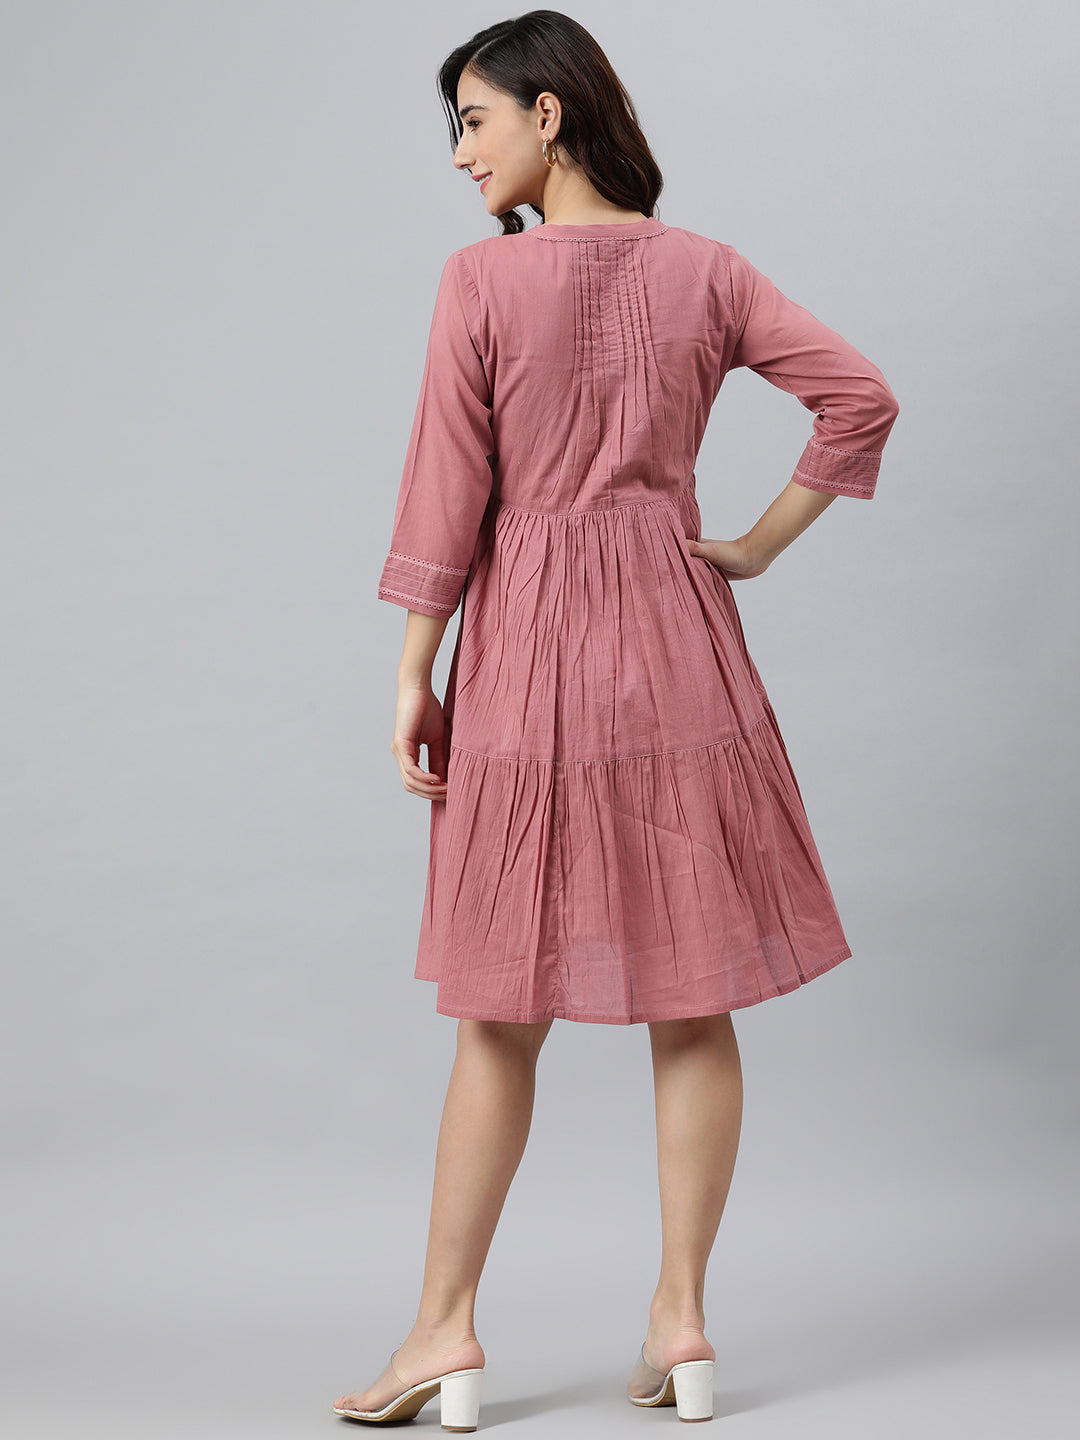 Western Dress Online India | Maharani Designer Boutique